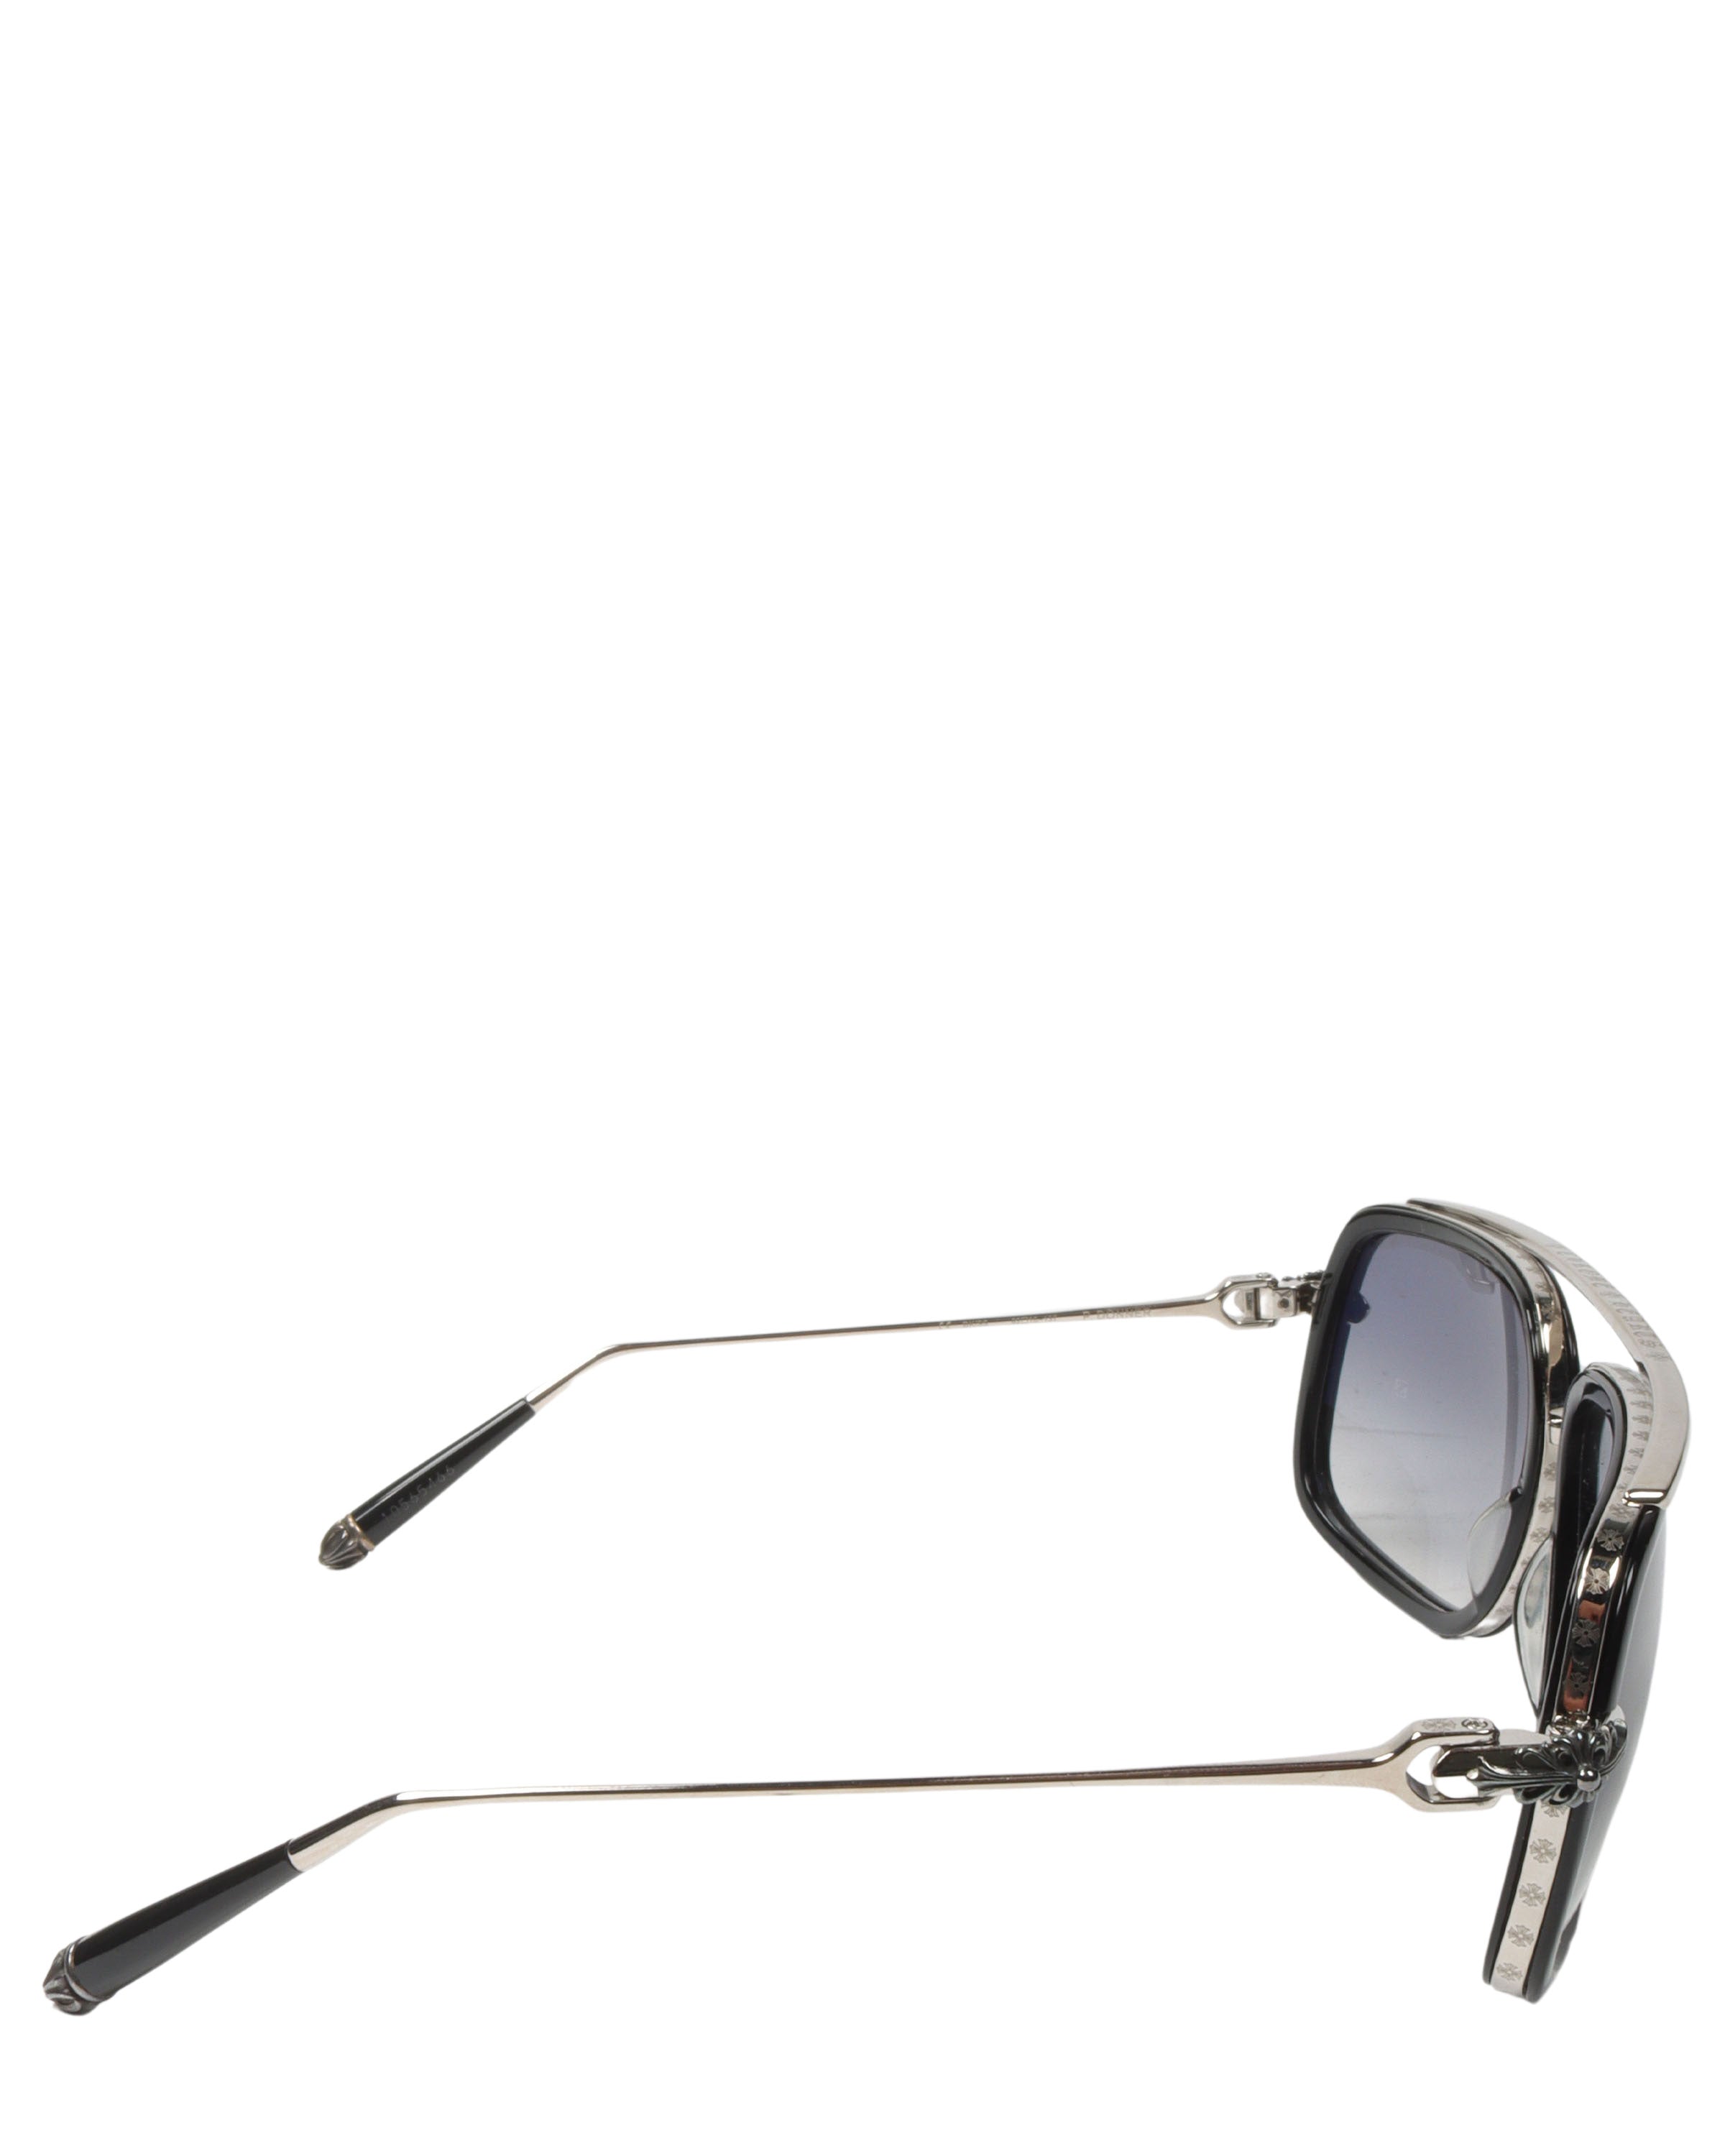 P. Donner Sunglasses